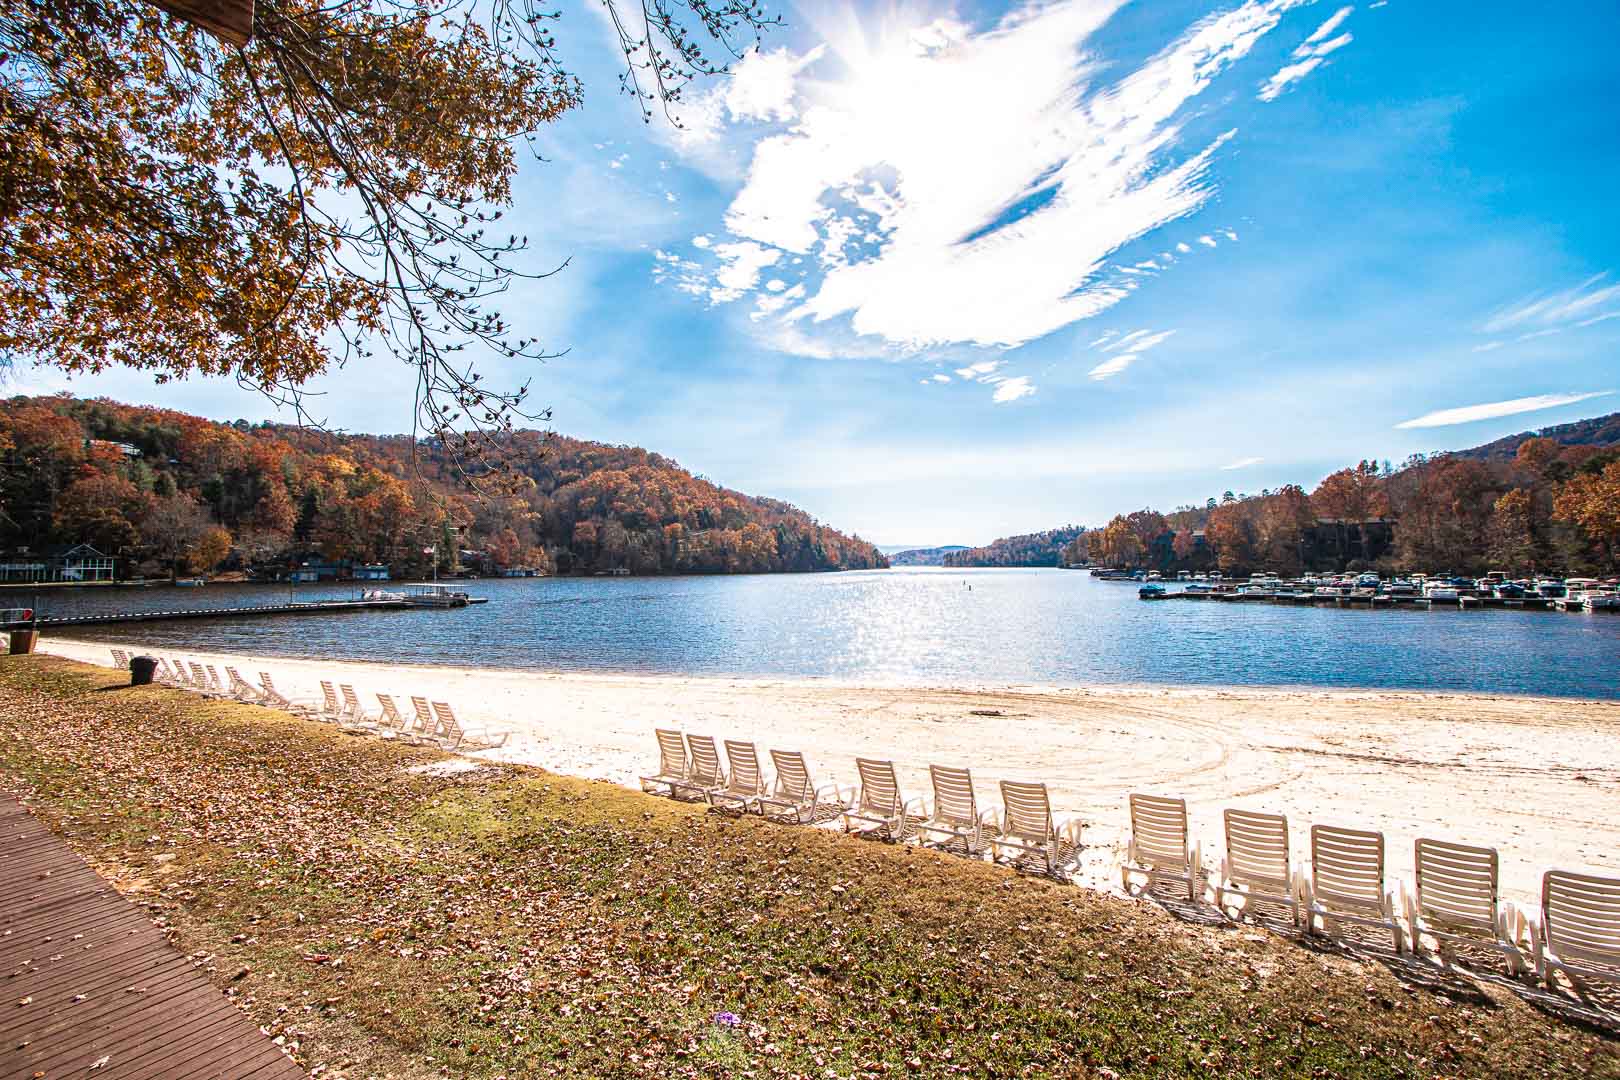 A relaxing lake view at VRI's Fox Run Resort in North Carolina.